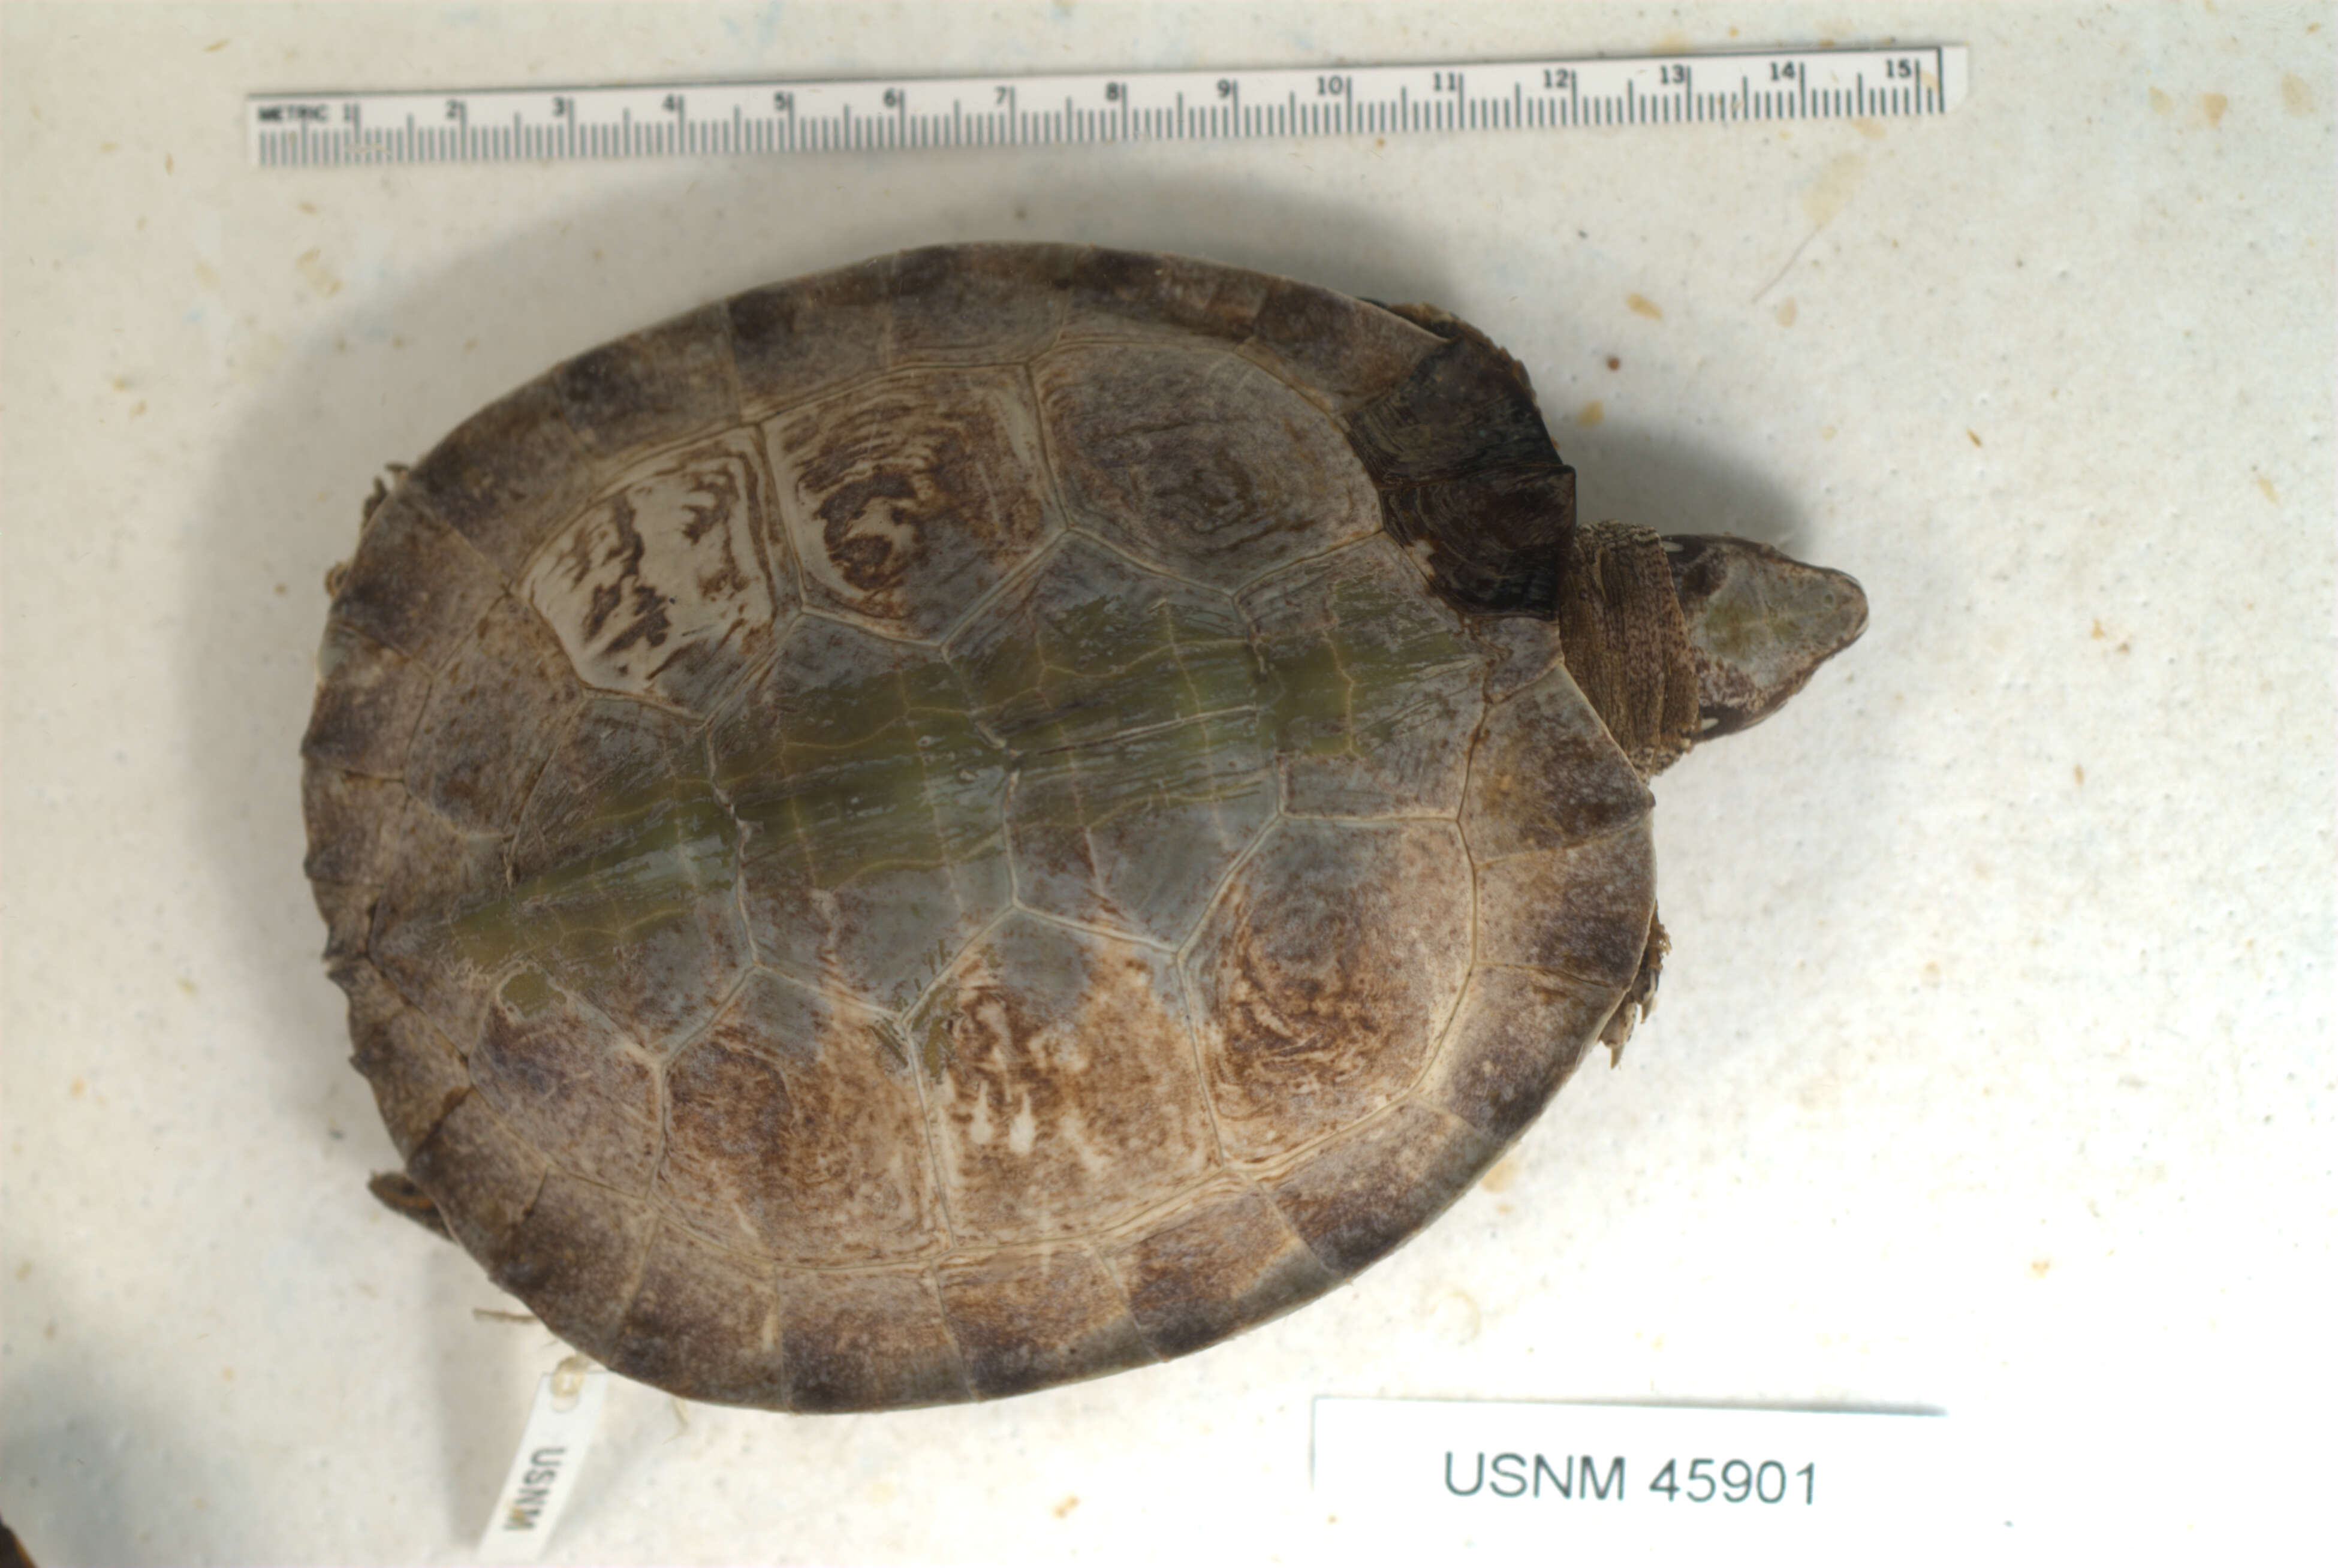 Image of Black River Turtle